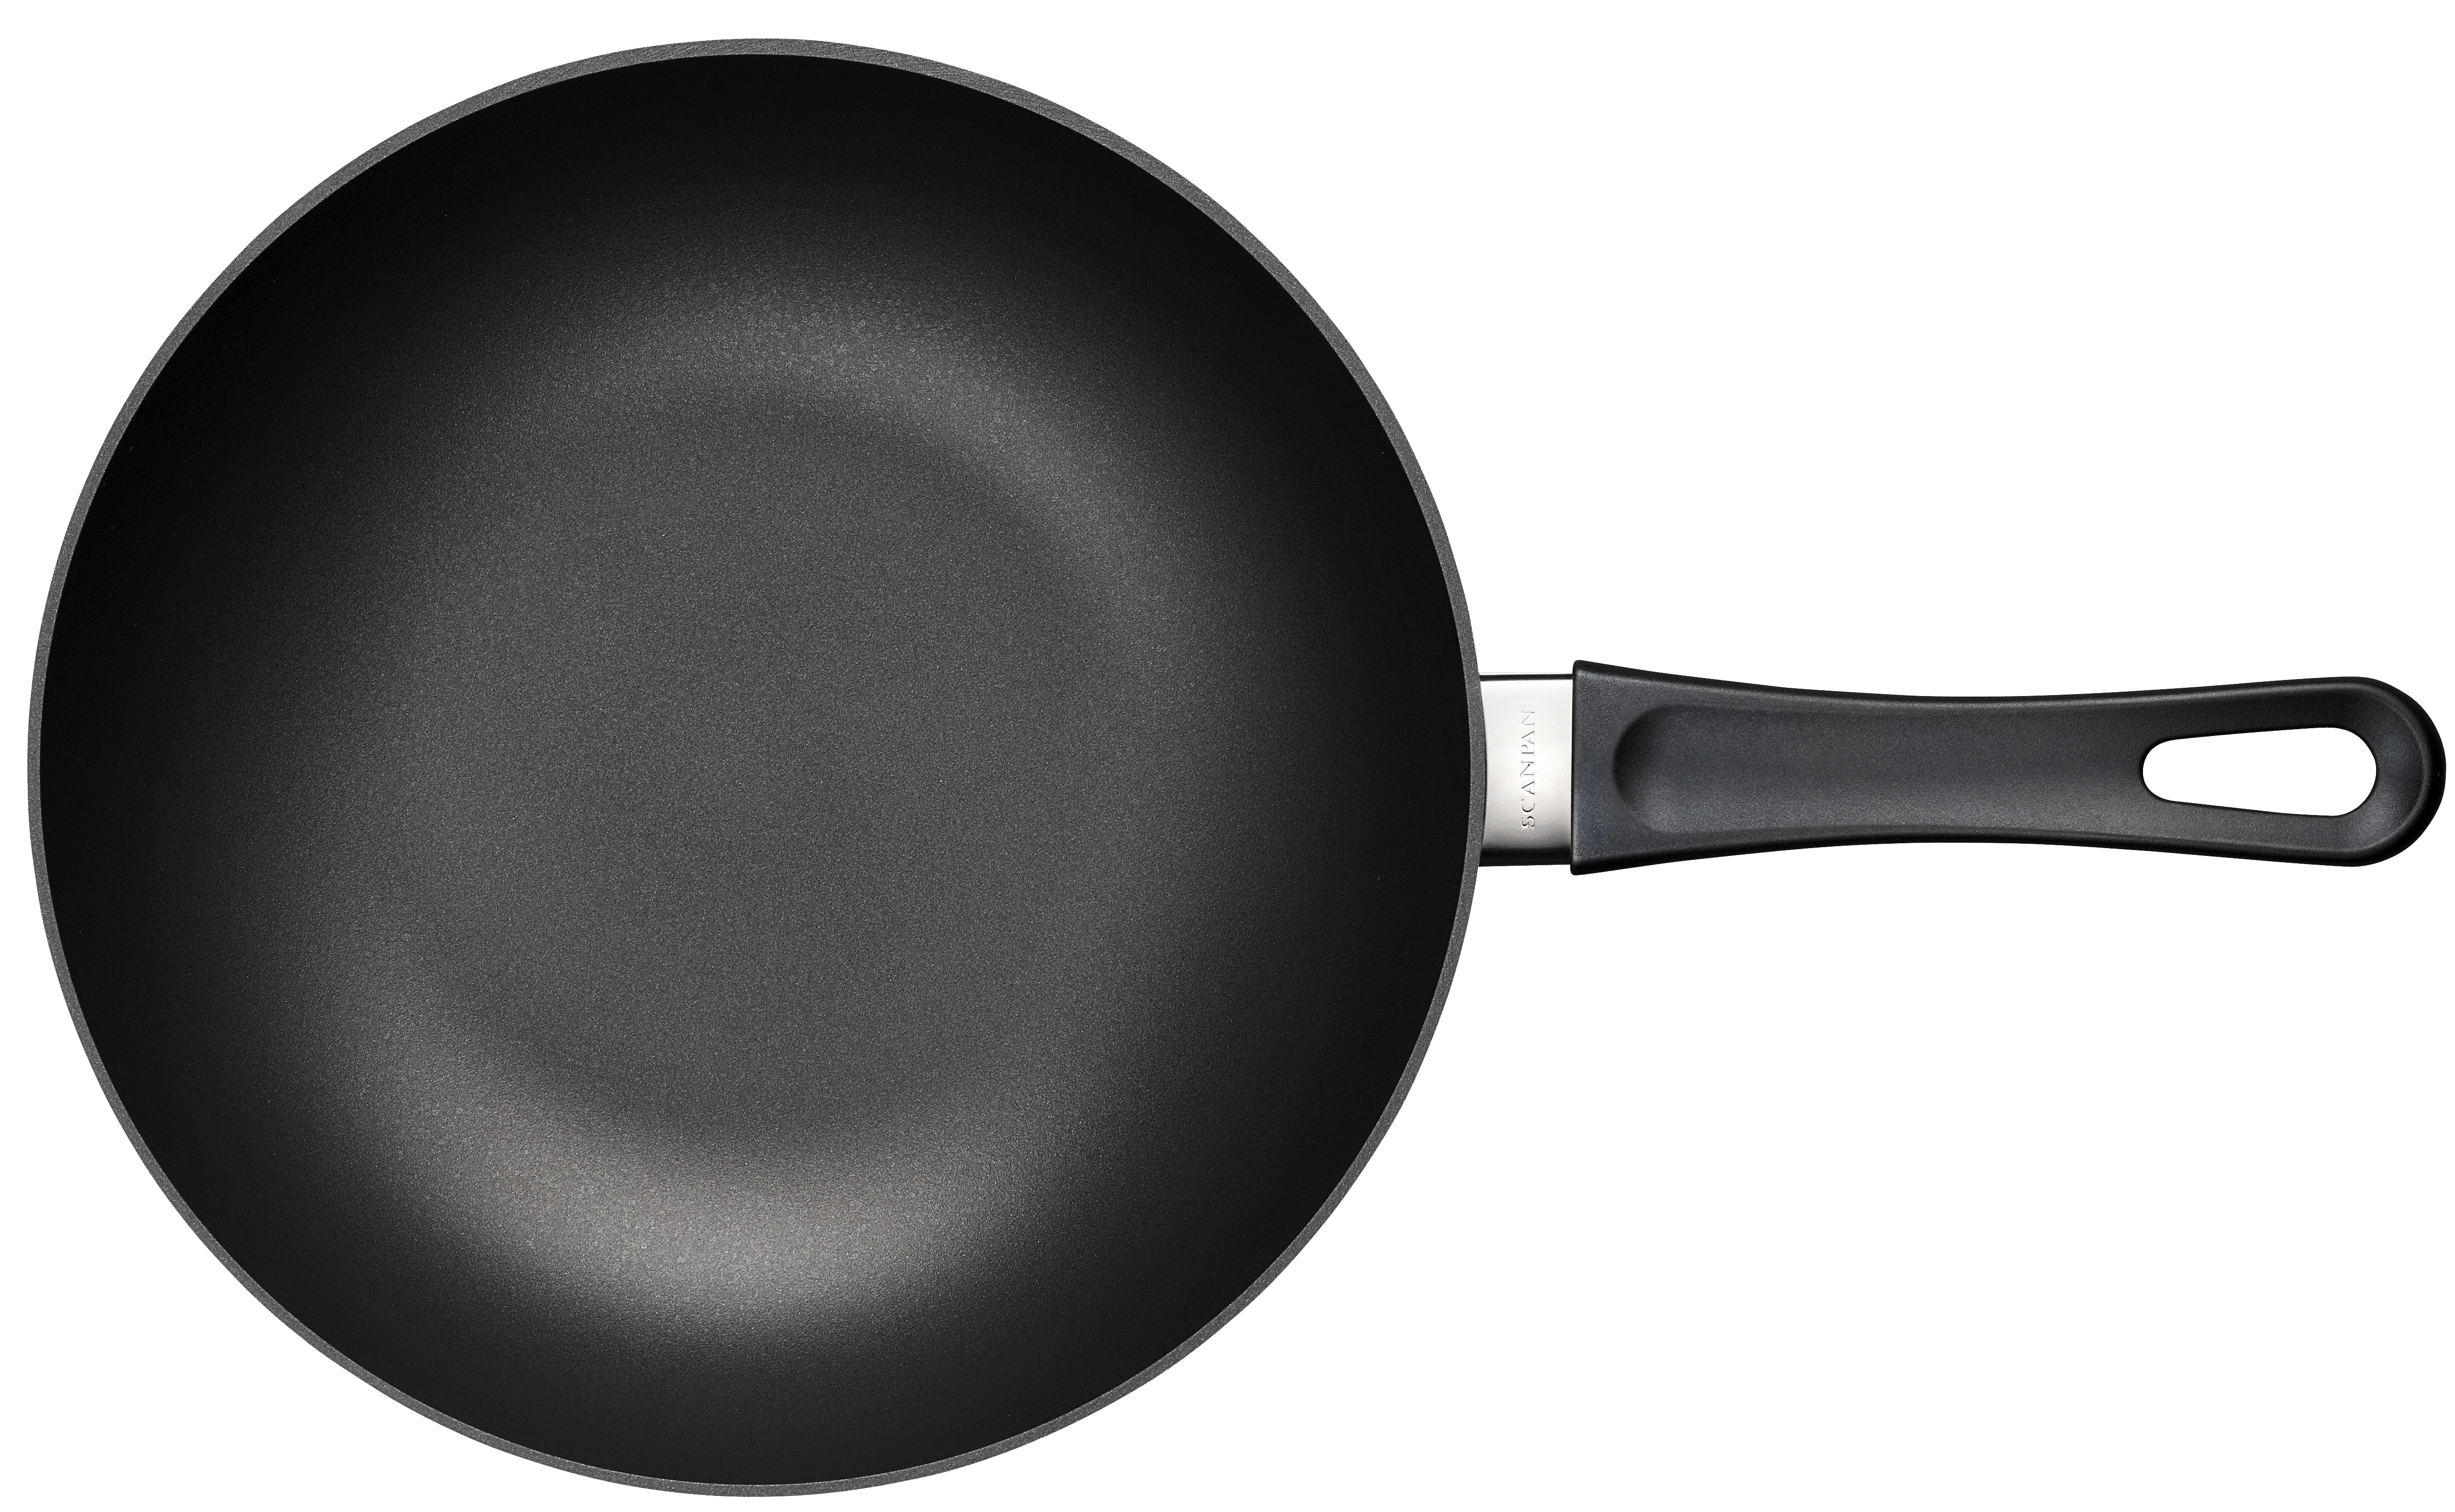 Non-Stick Stir Fry Pan With Lid - 24cm